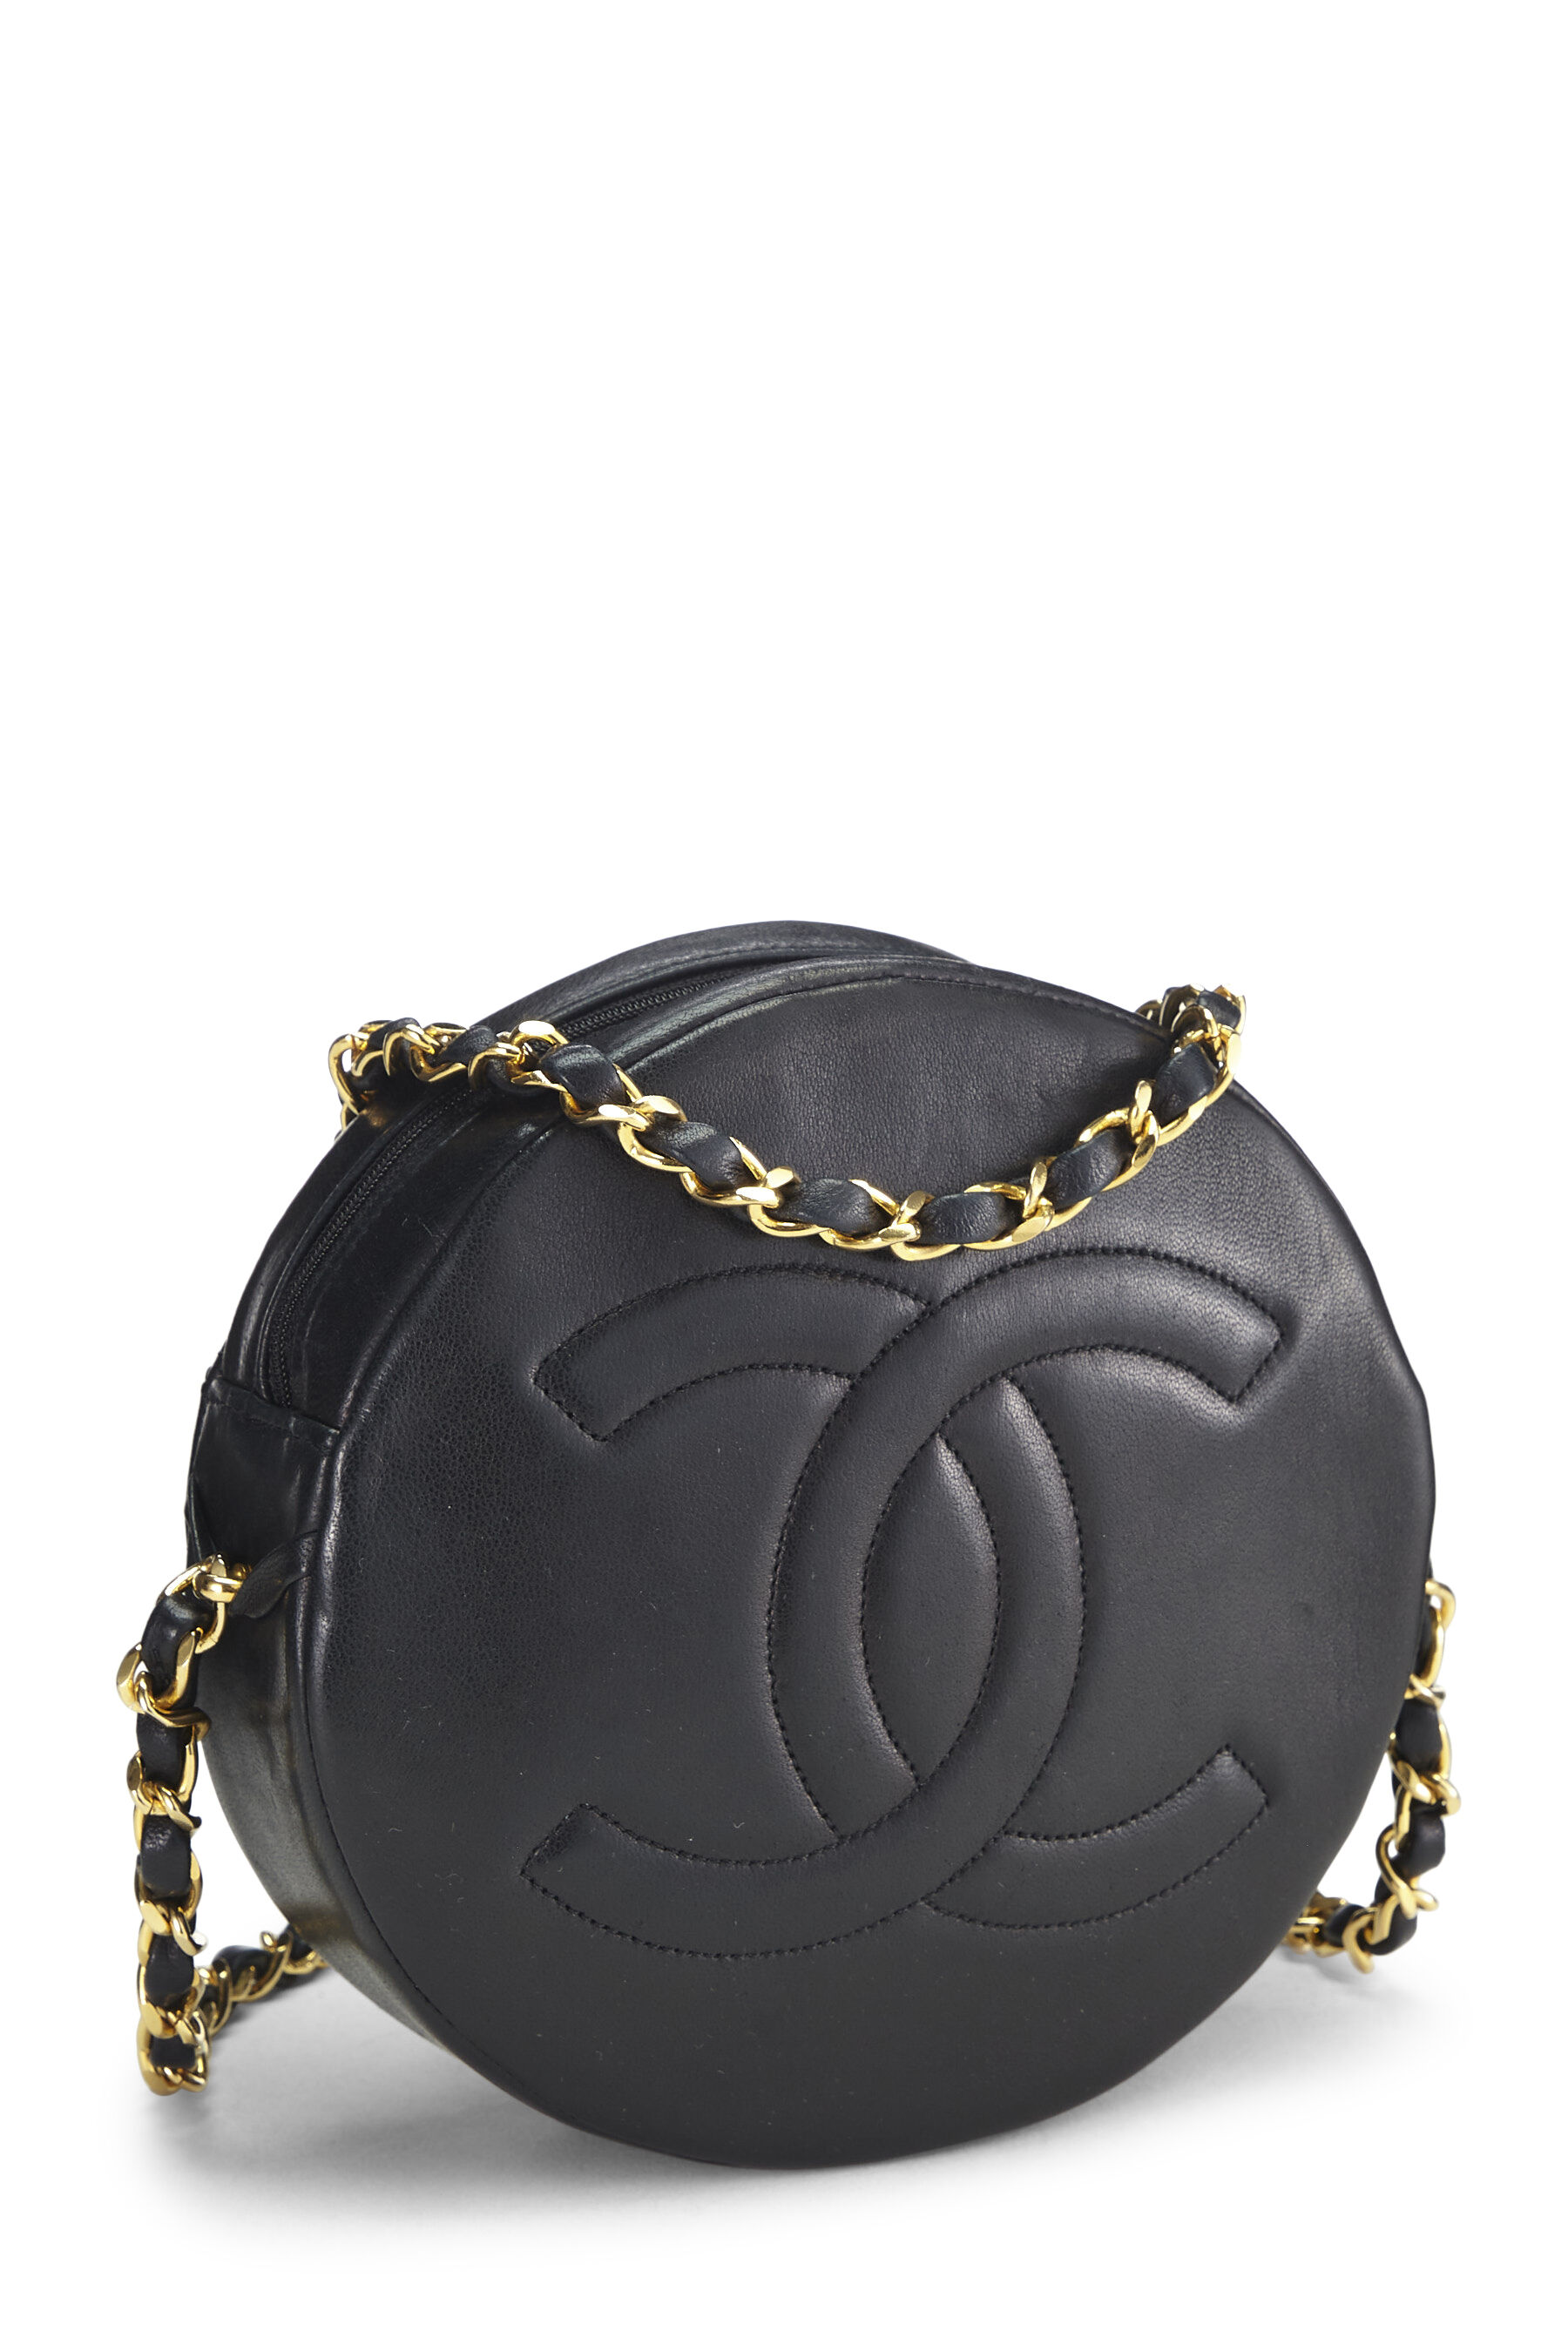 Chanel - Black Lambskin Round Shoulder Bag Mini